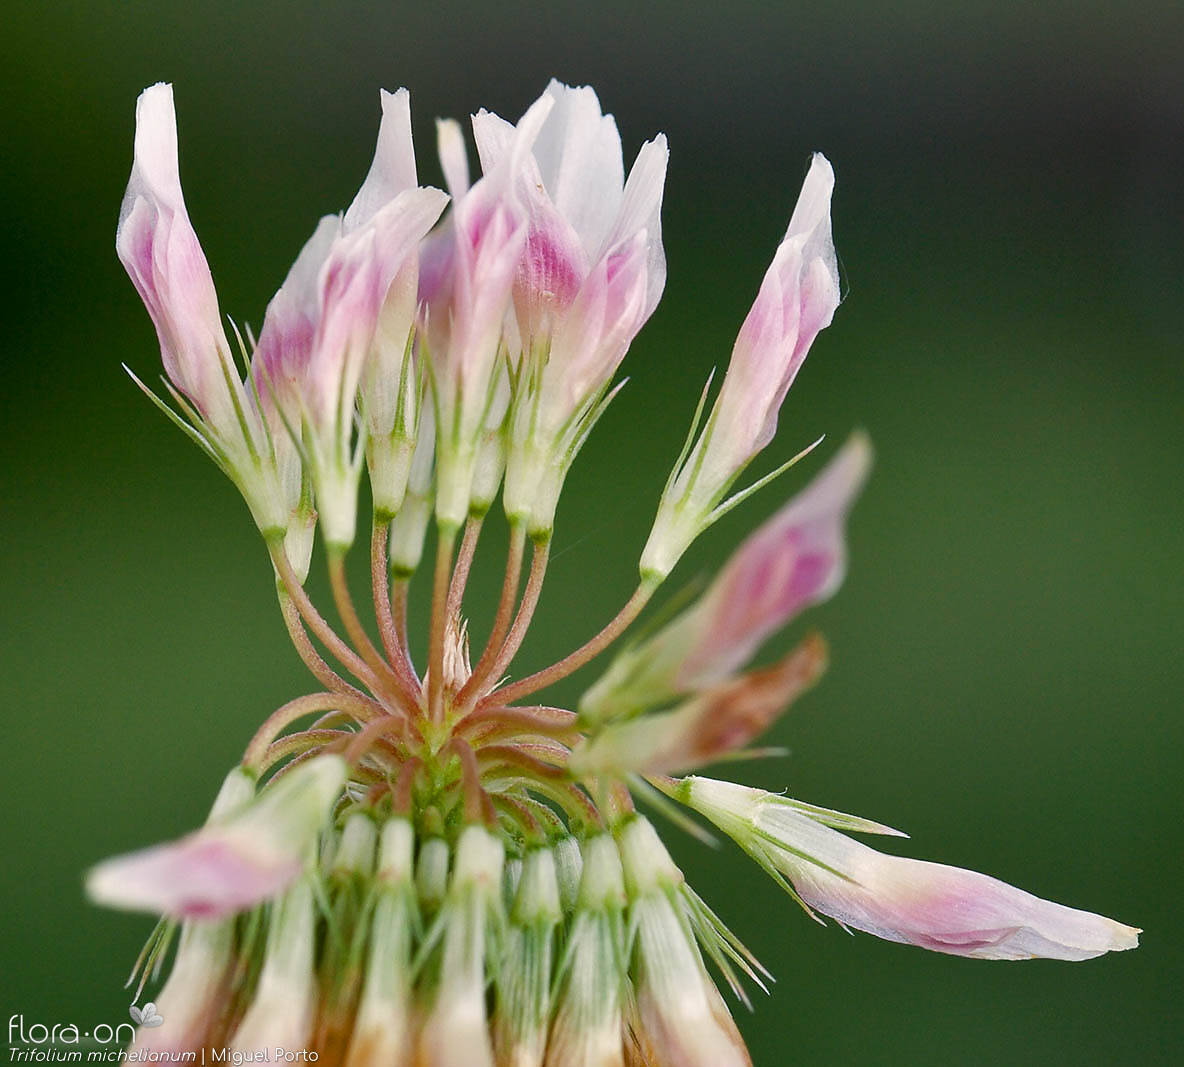 Trifolium michelianum - Flor (close-up) | Miguel Porto; CC BY-NC 4.0